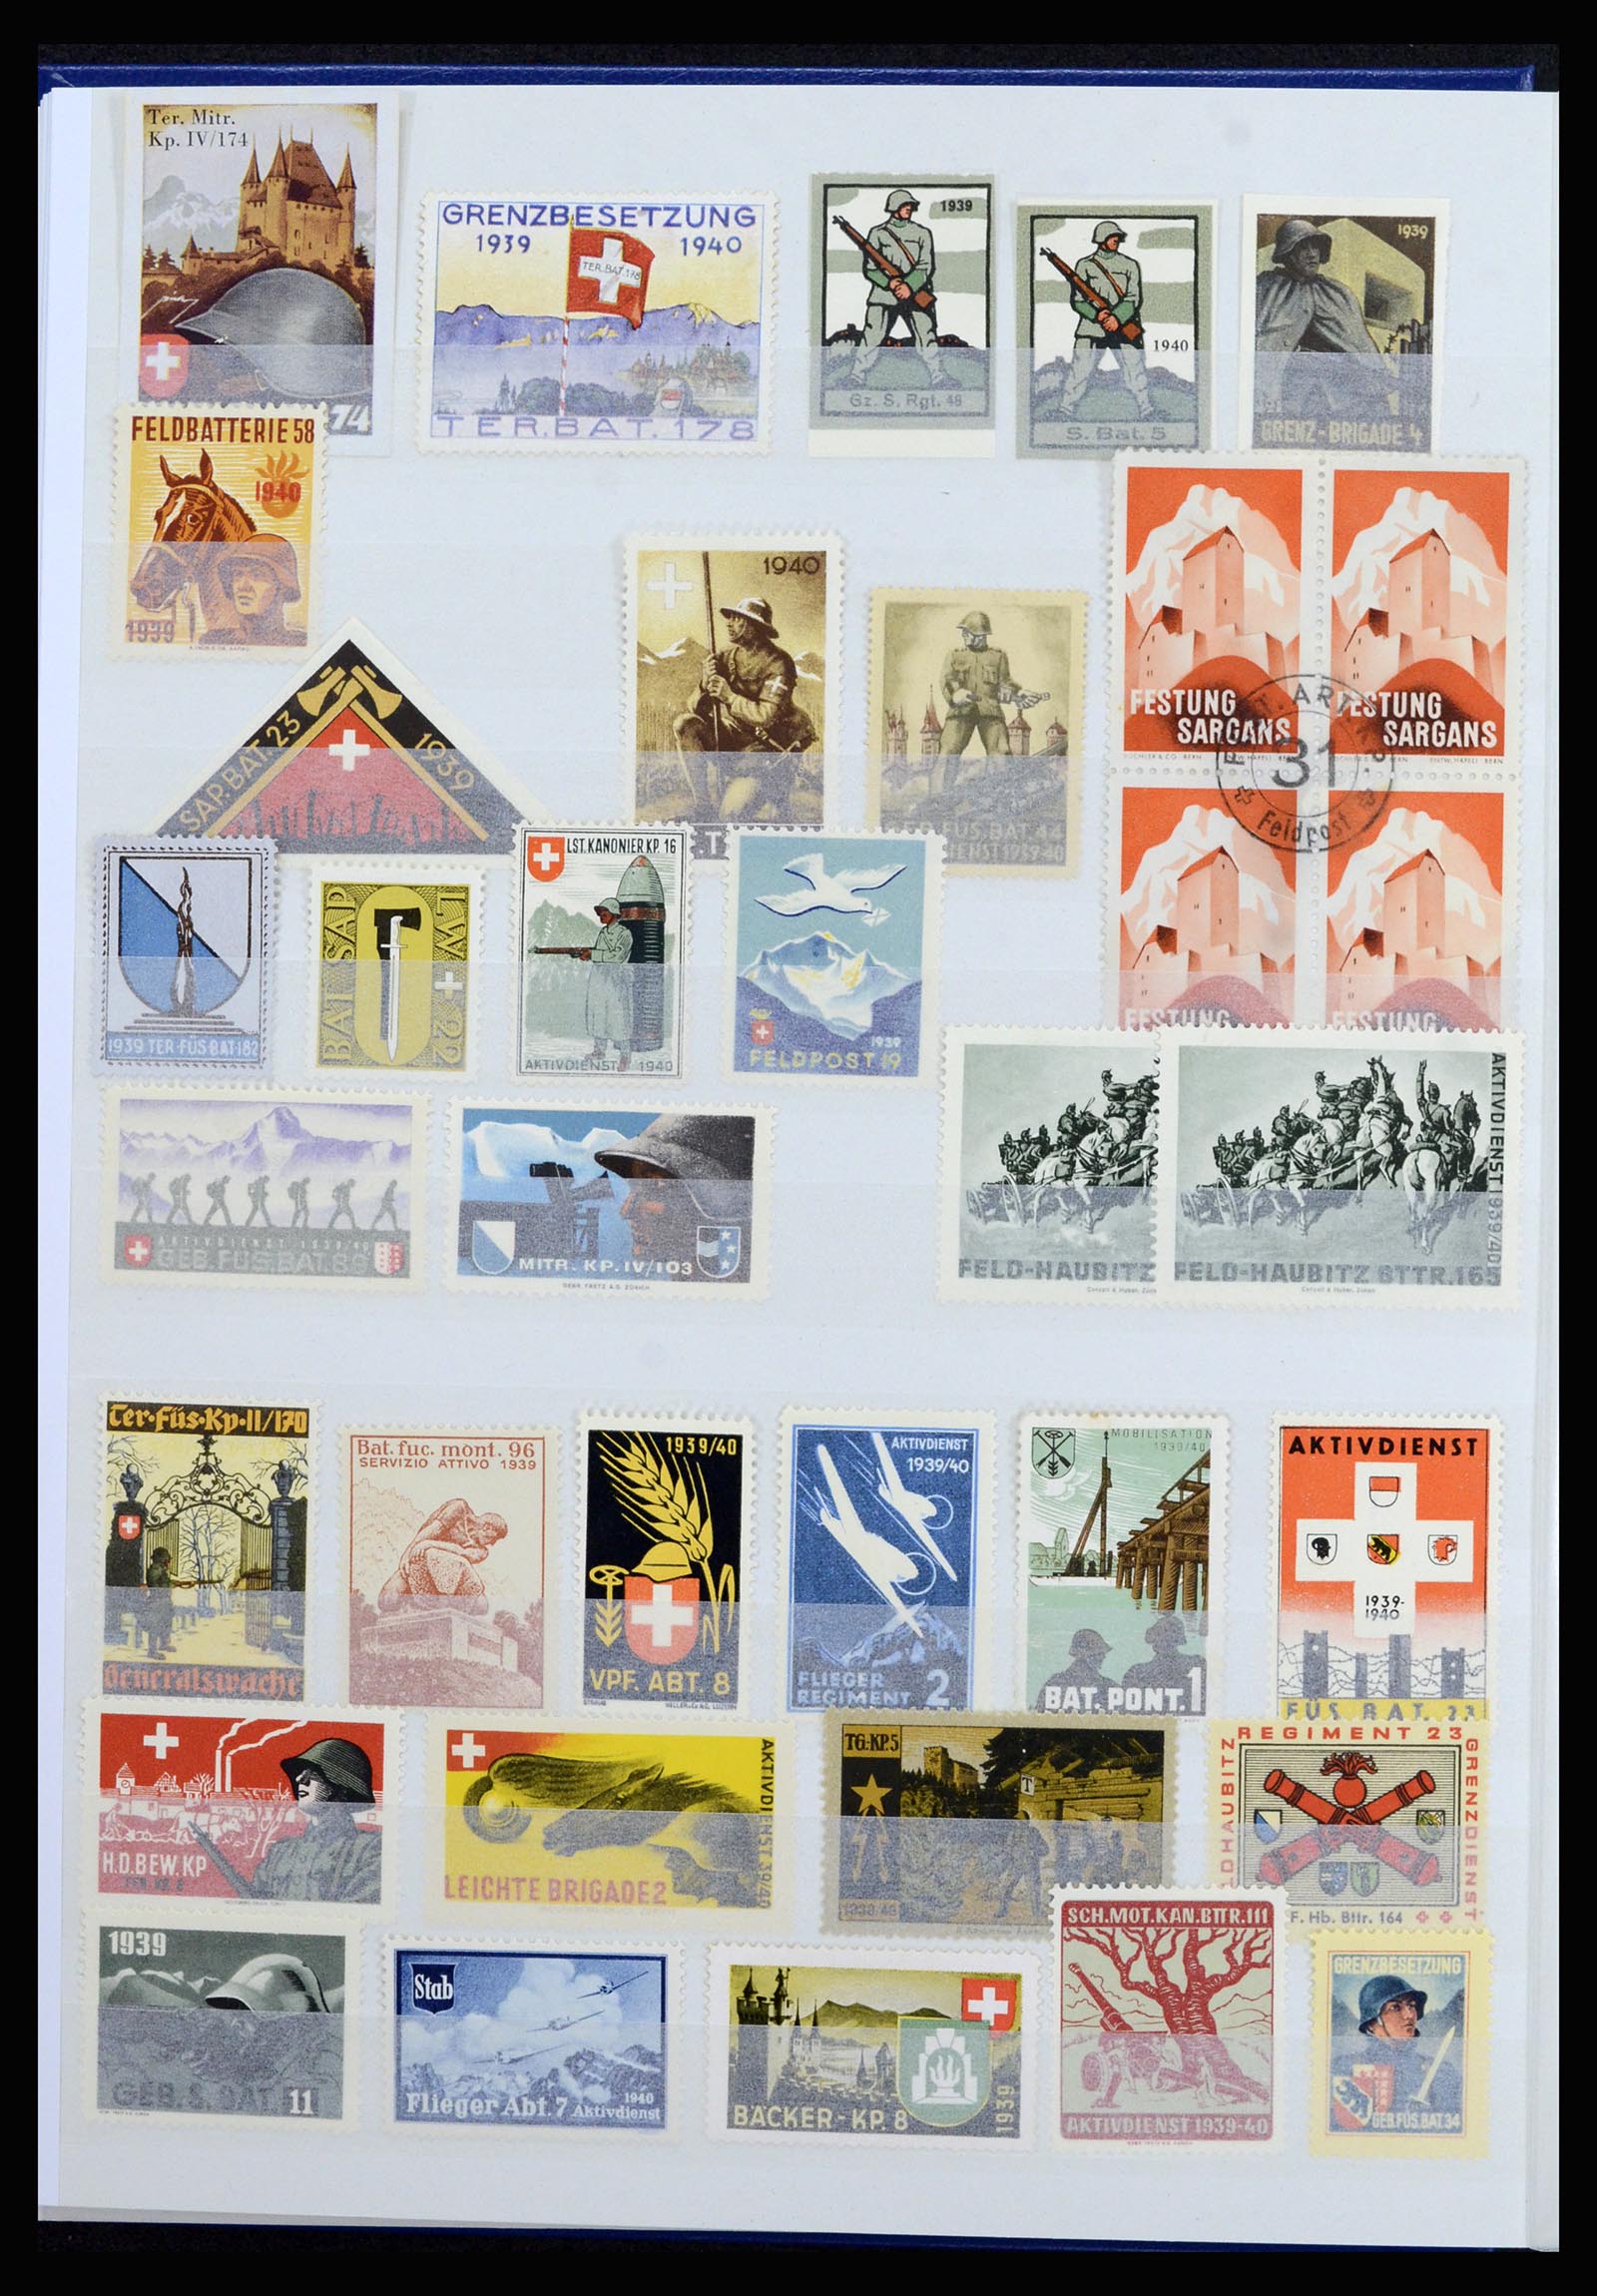 37149 014 - Stamp collection 37149 Switzerland soldier stamps 1914-1945.